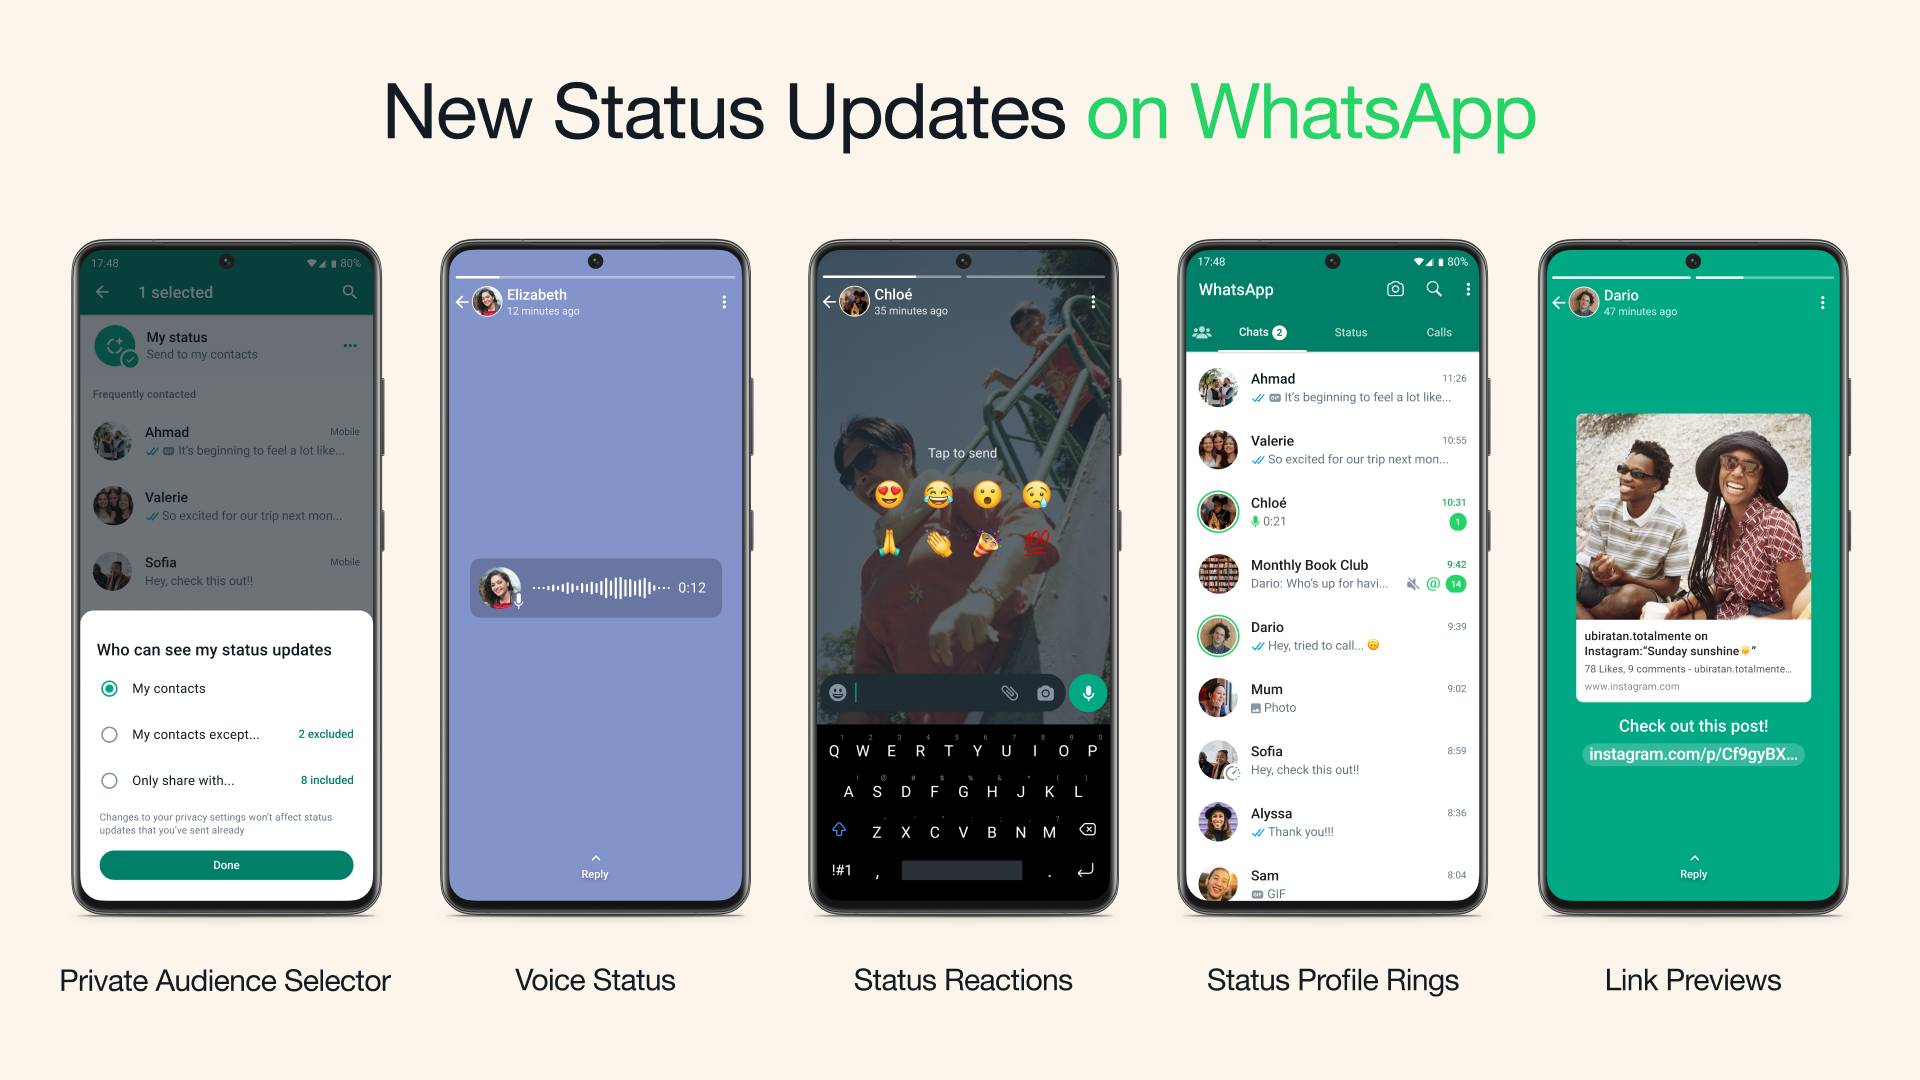 5 SCHIMBARI WhatsApp Anuntate mod OFICIAL iPhone Android noutati